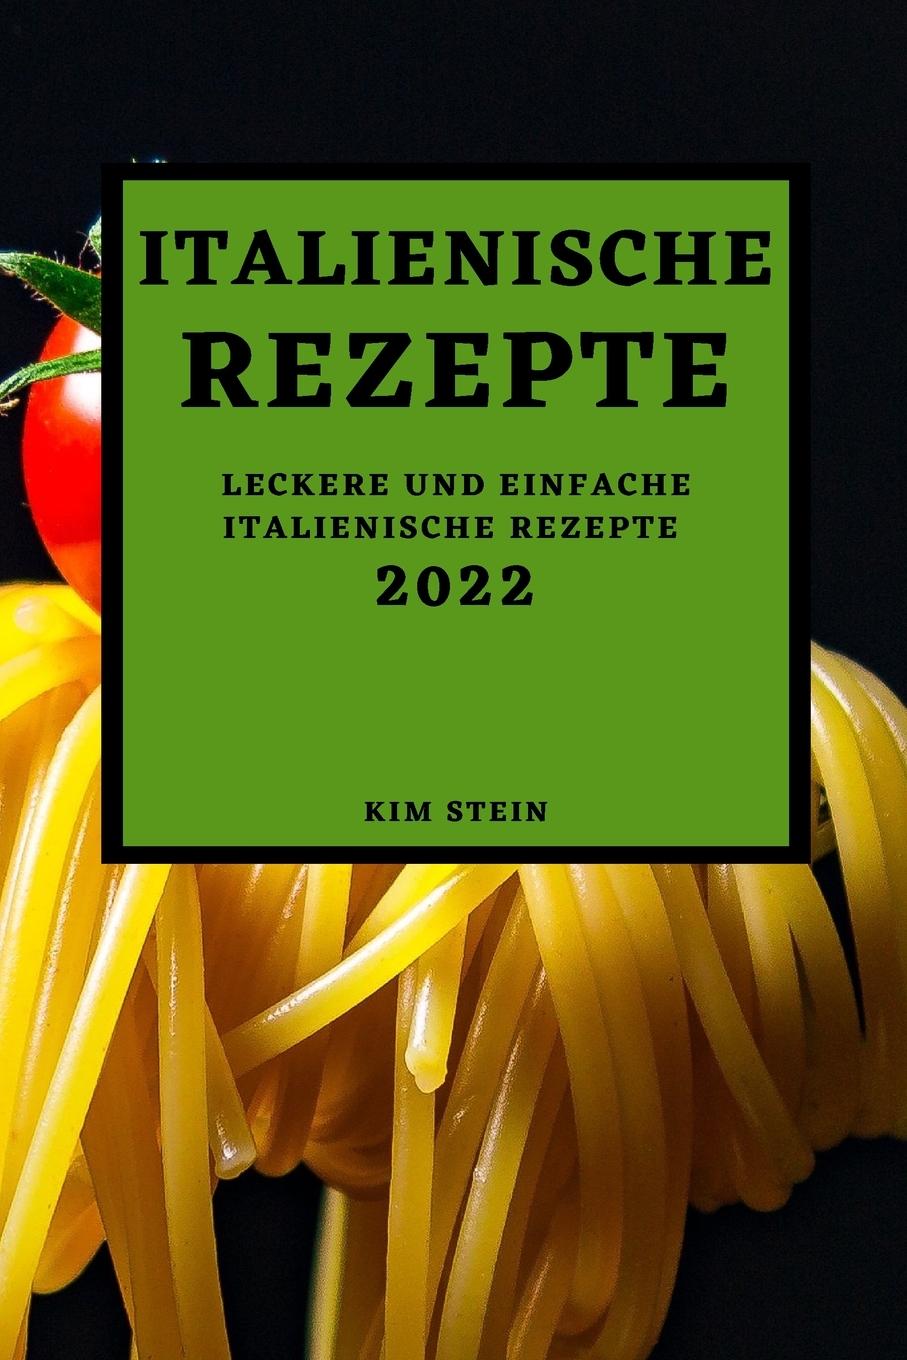 Kniha Italienische Rezepte 2022 